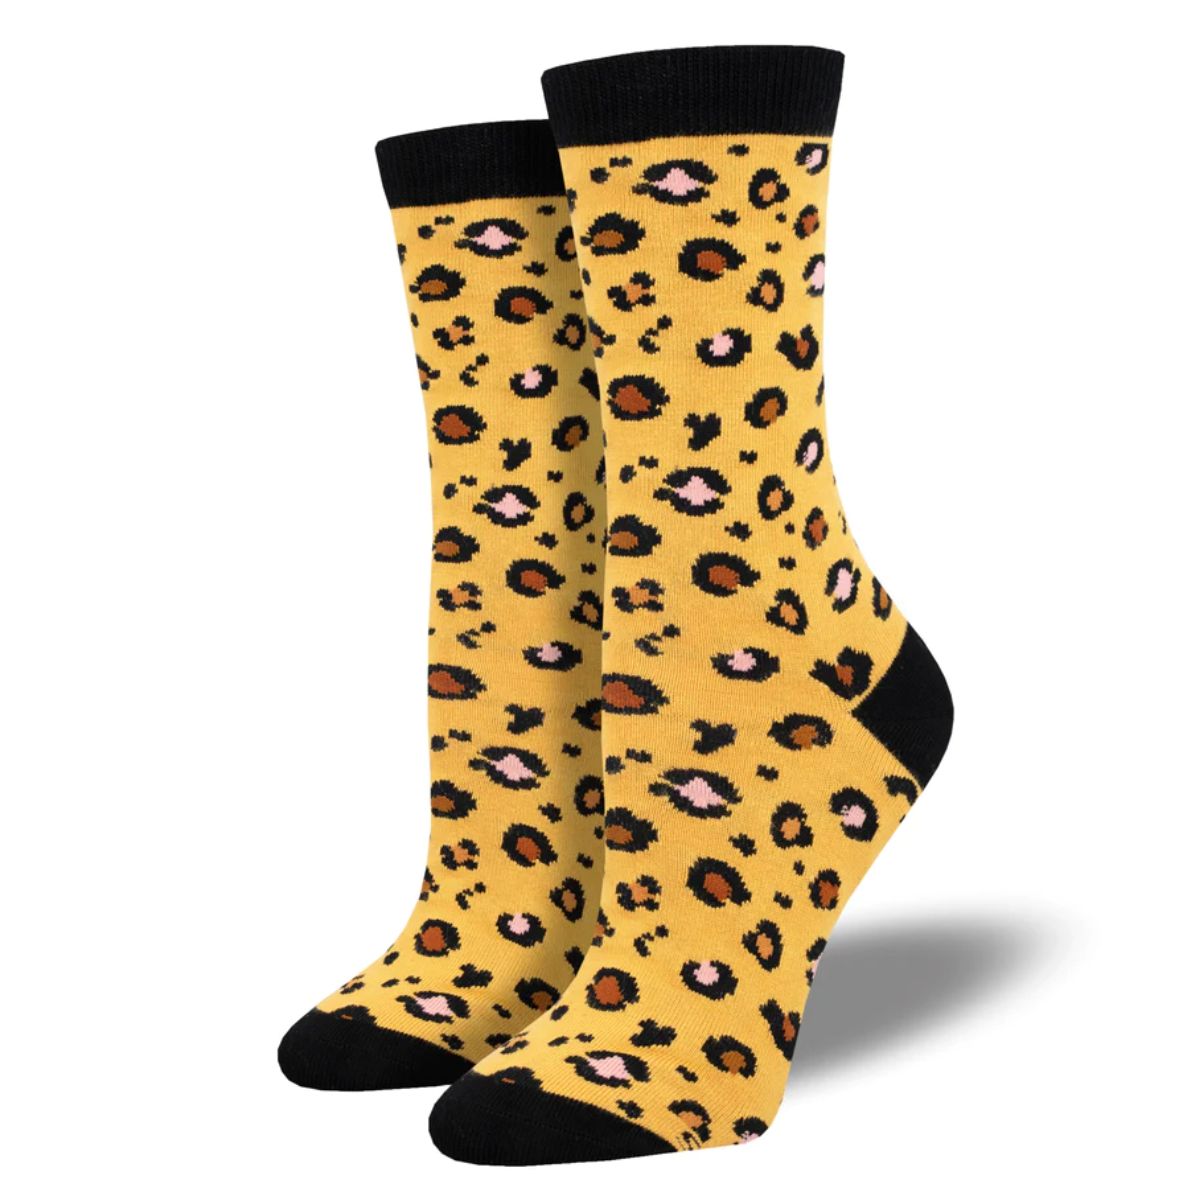 Leopard print socks a pair of yellow crew socks with leopard print